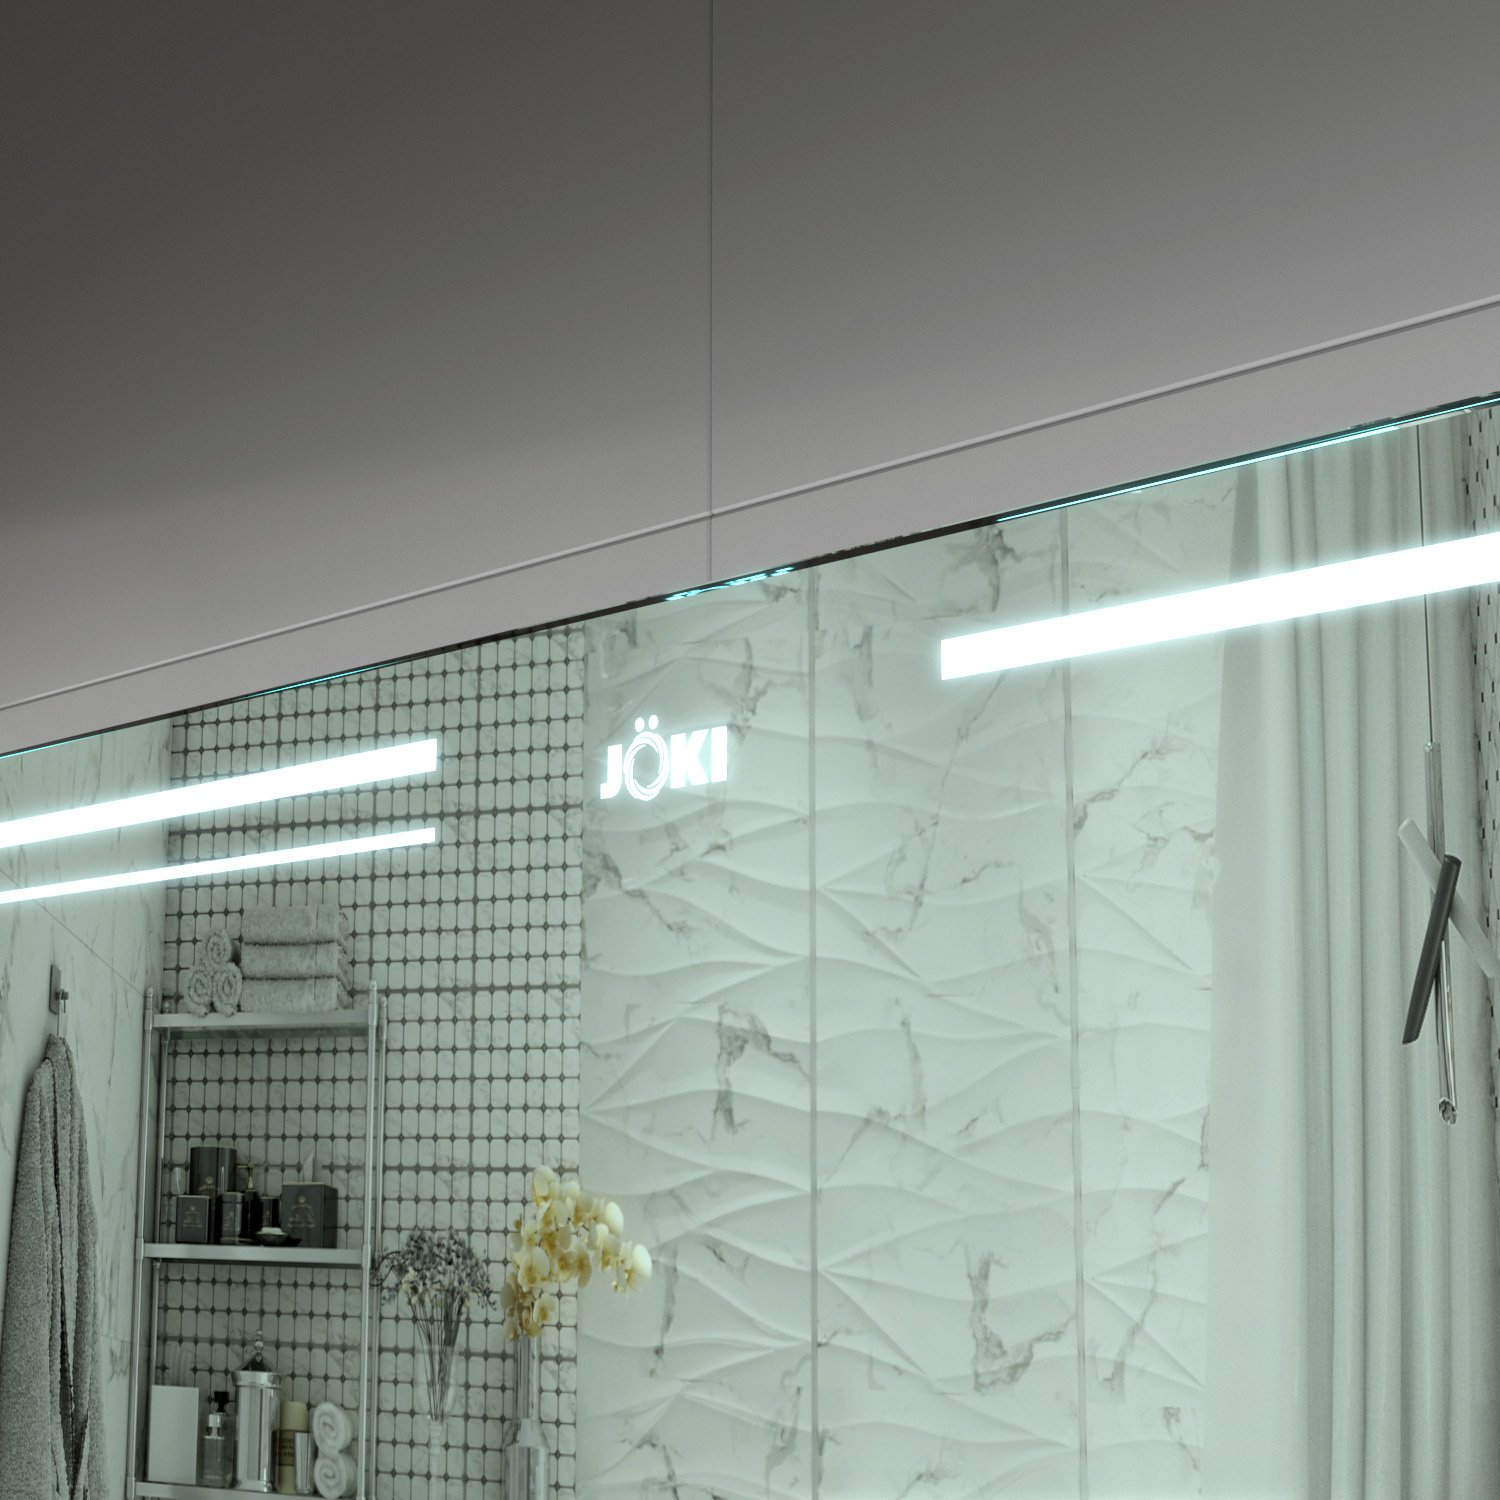 Зеркало Joki Onni 100x70, c подсветкой и диммером, функцией антизапотевания - фото 1